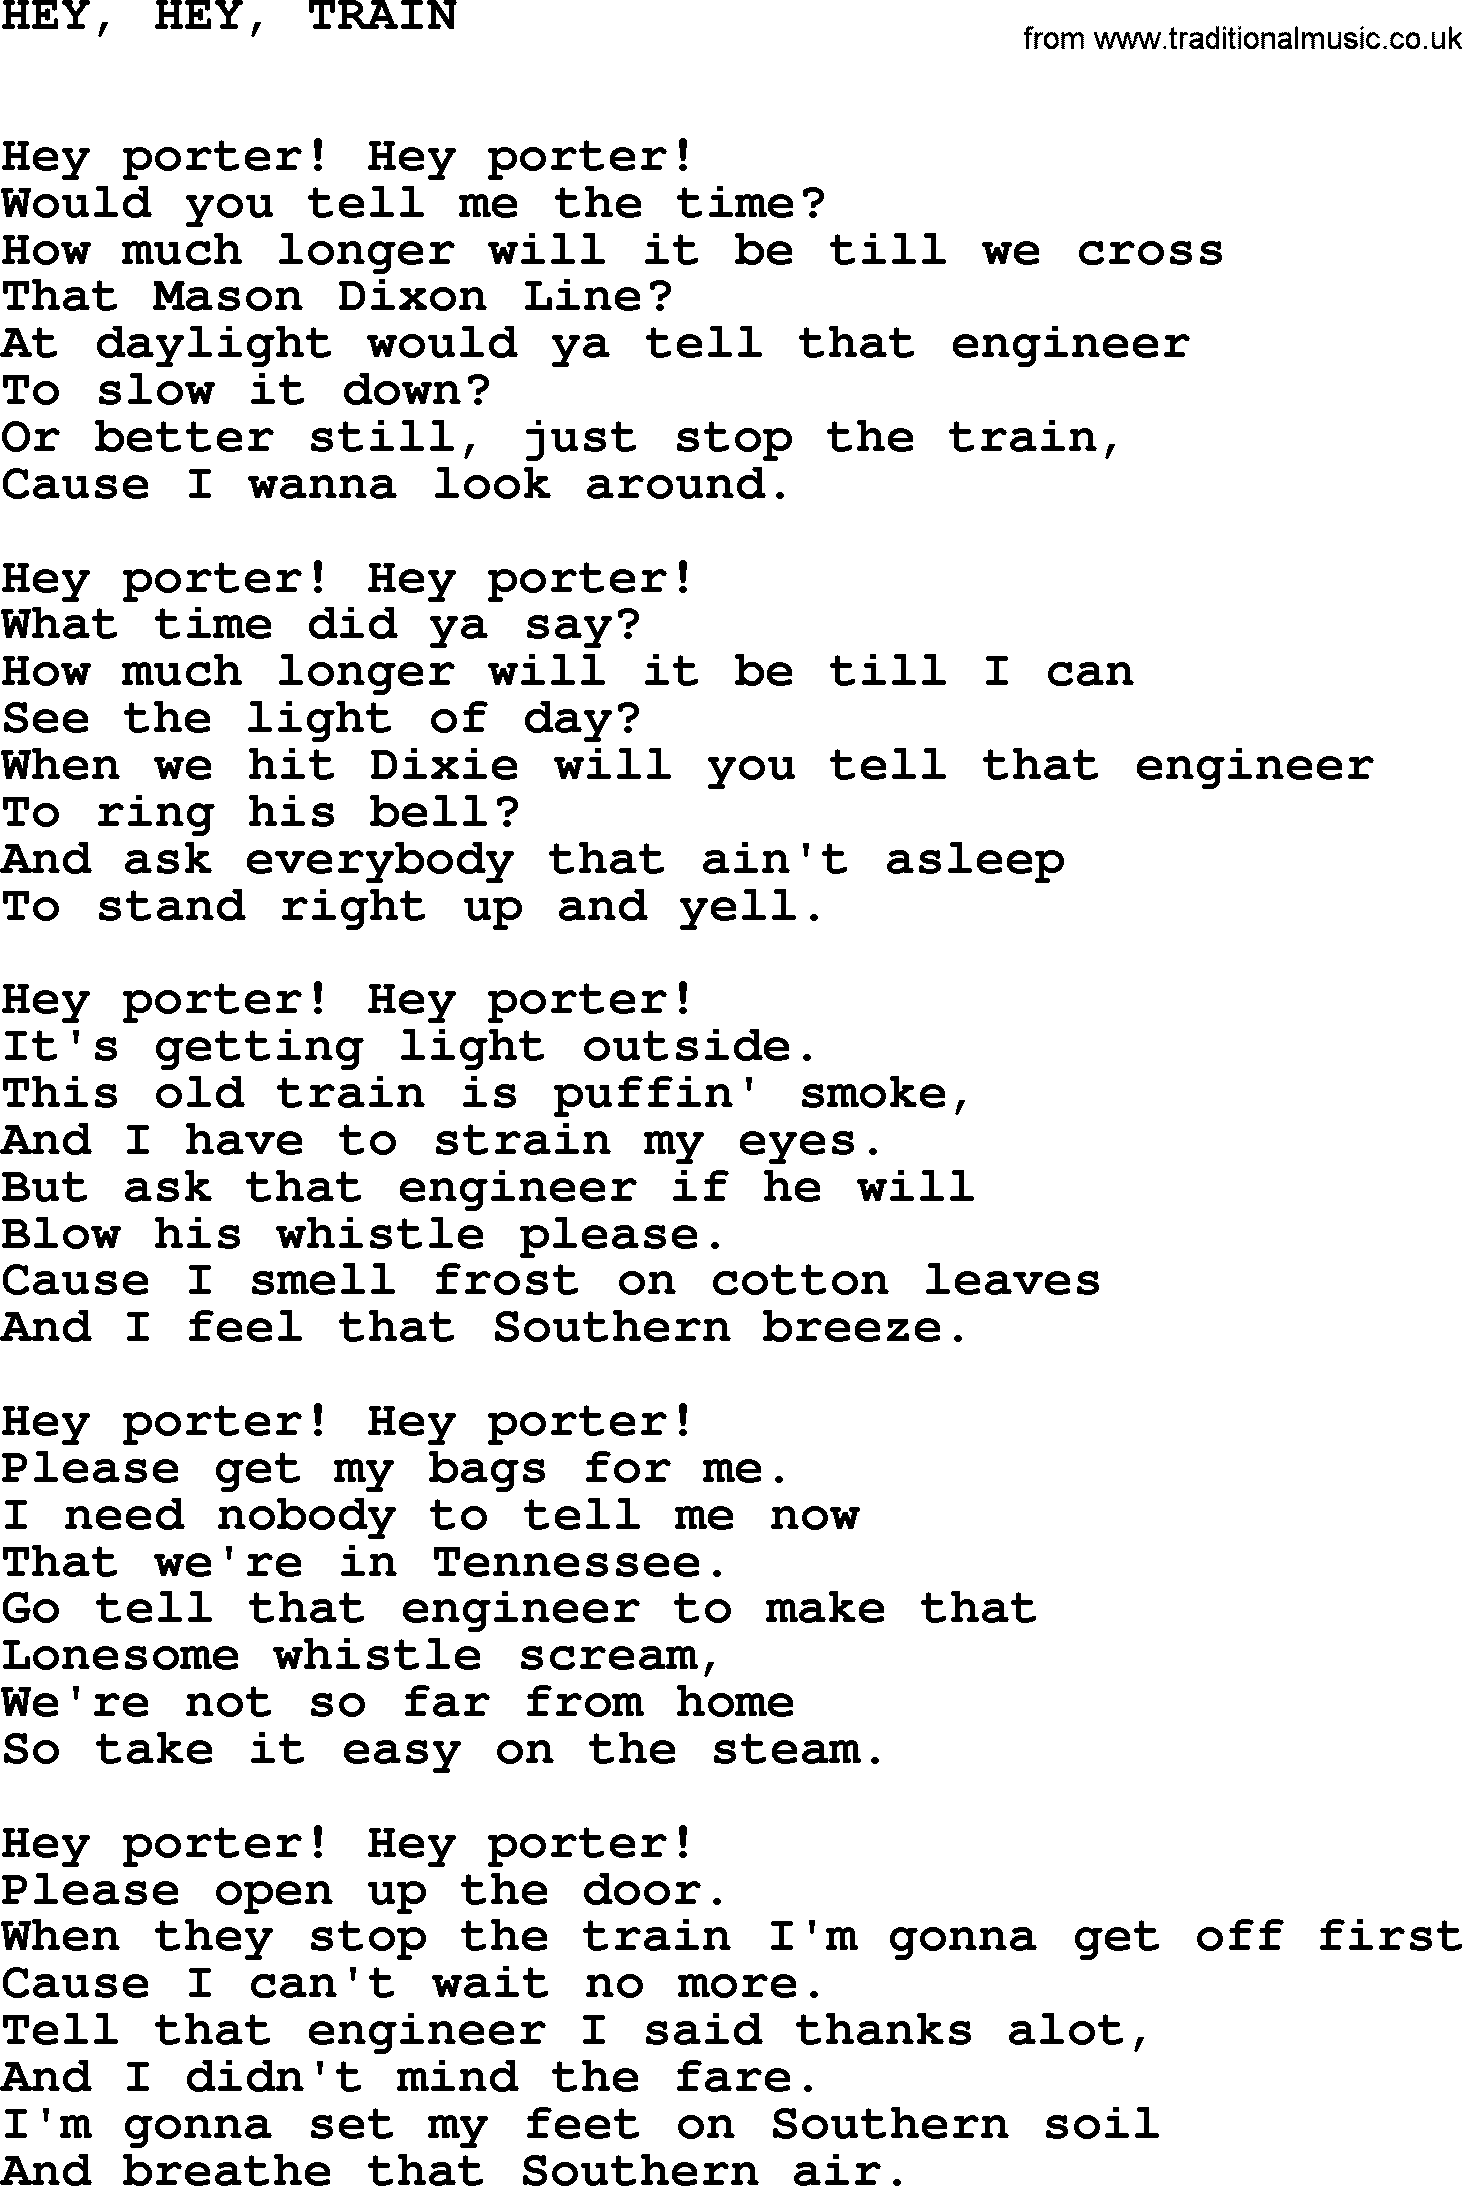 Johnny Cash song Hey, Hey, Train.txt lyrics